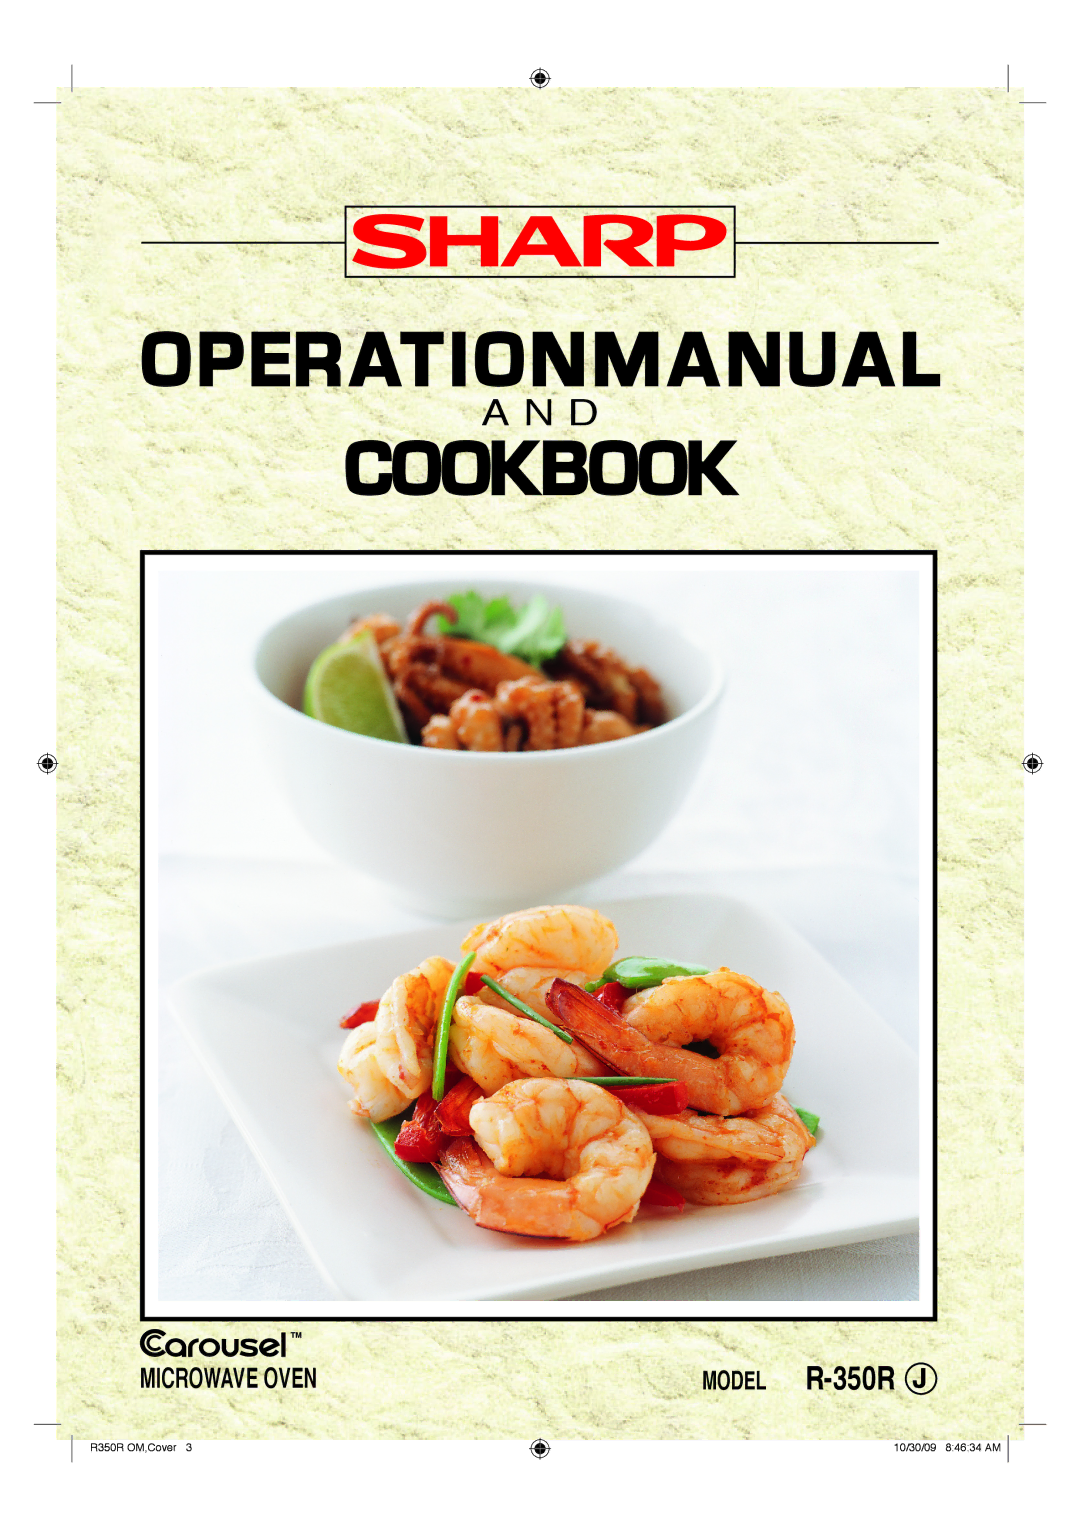 Sharp manual Operationmanual Cookbook, Model R-350R J 